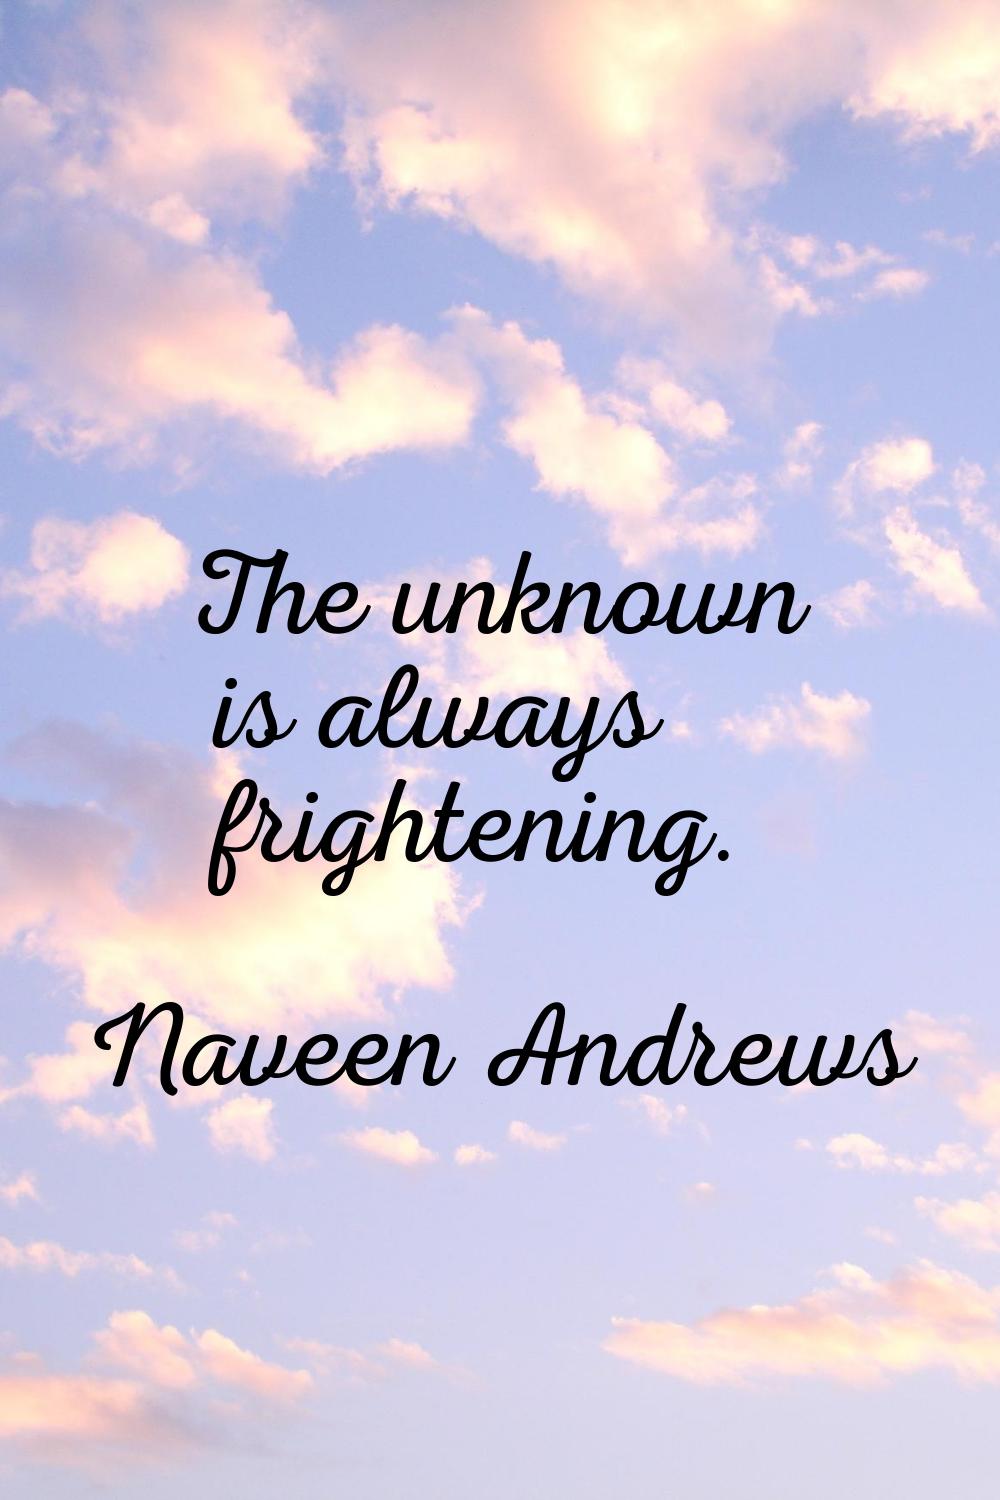 The unknown is always frightening.